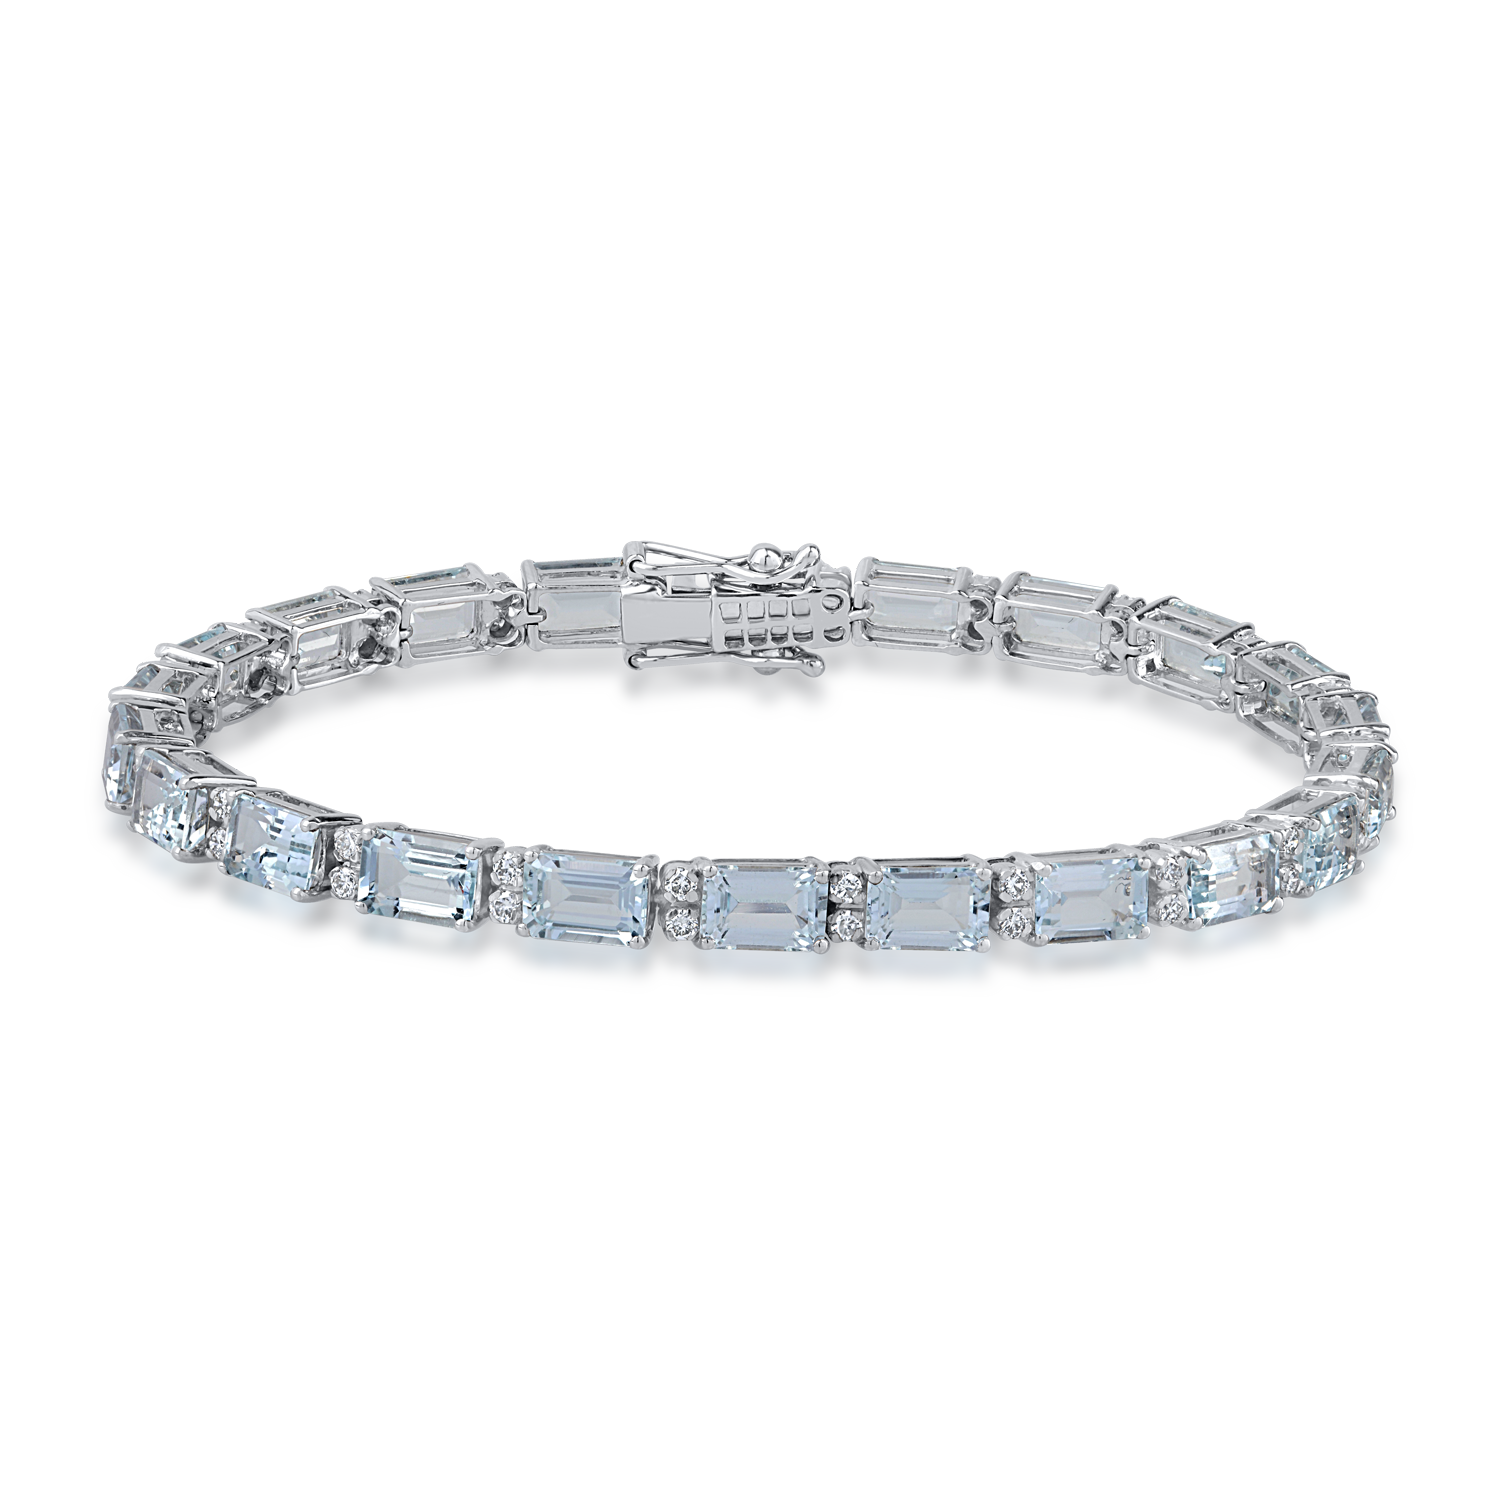 White gold tennis bracelet with 11.53ct aquamarine and 0.72ct diamonds